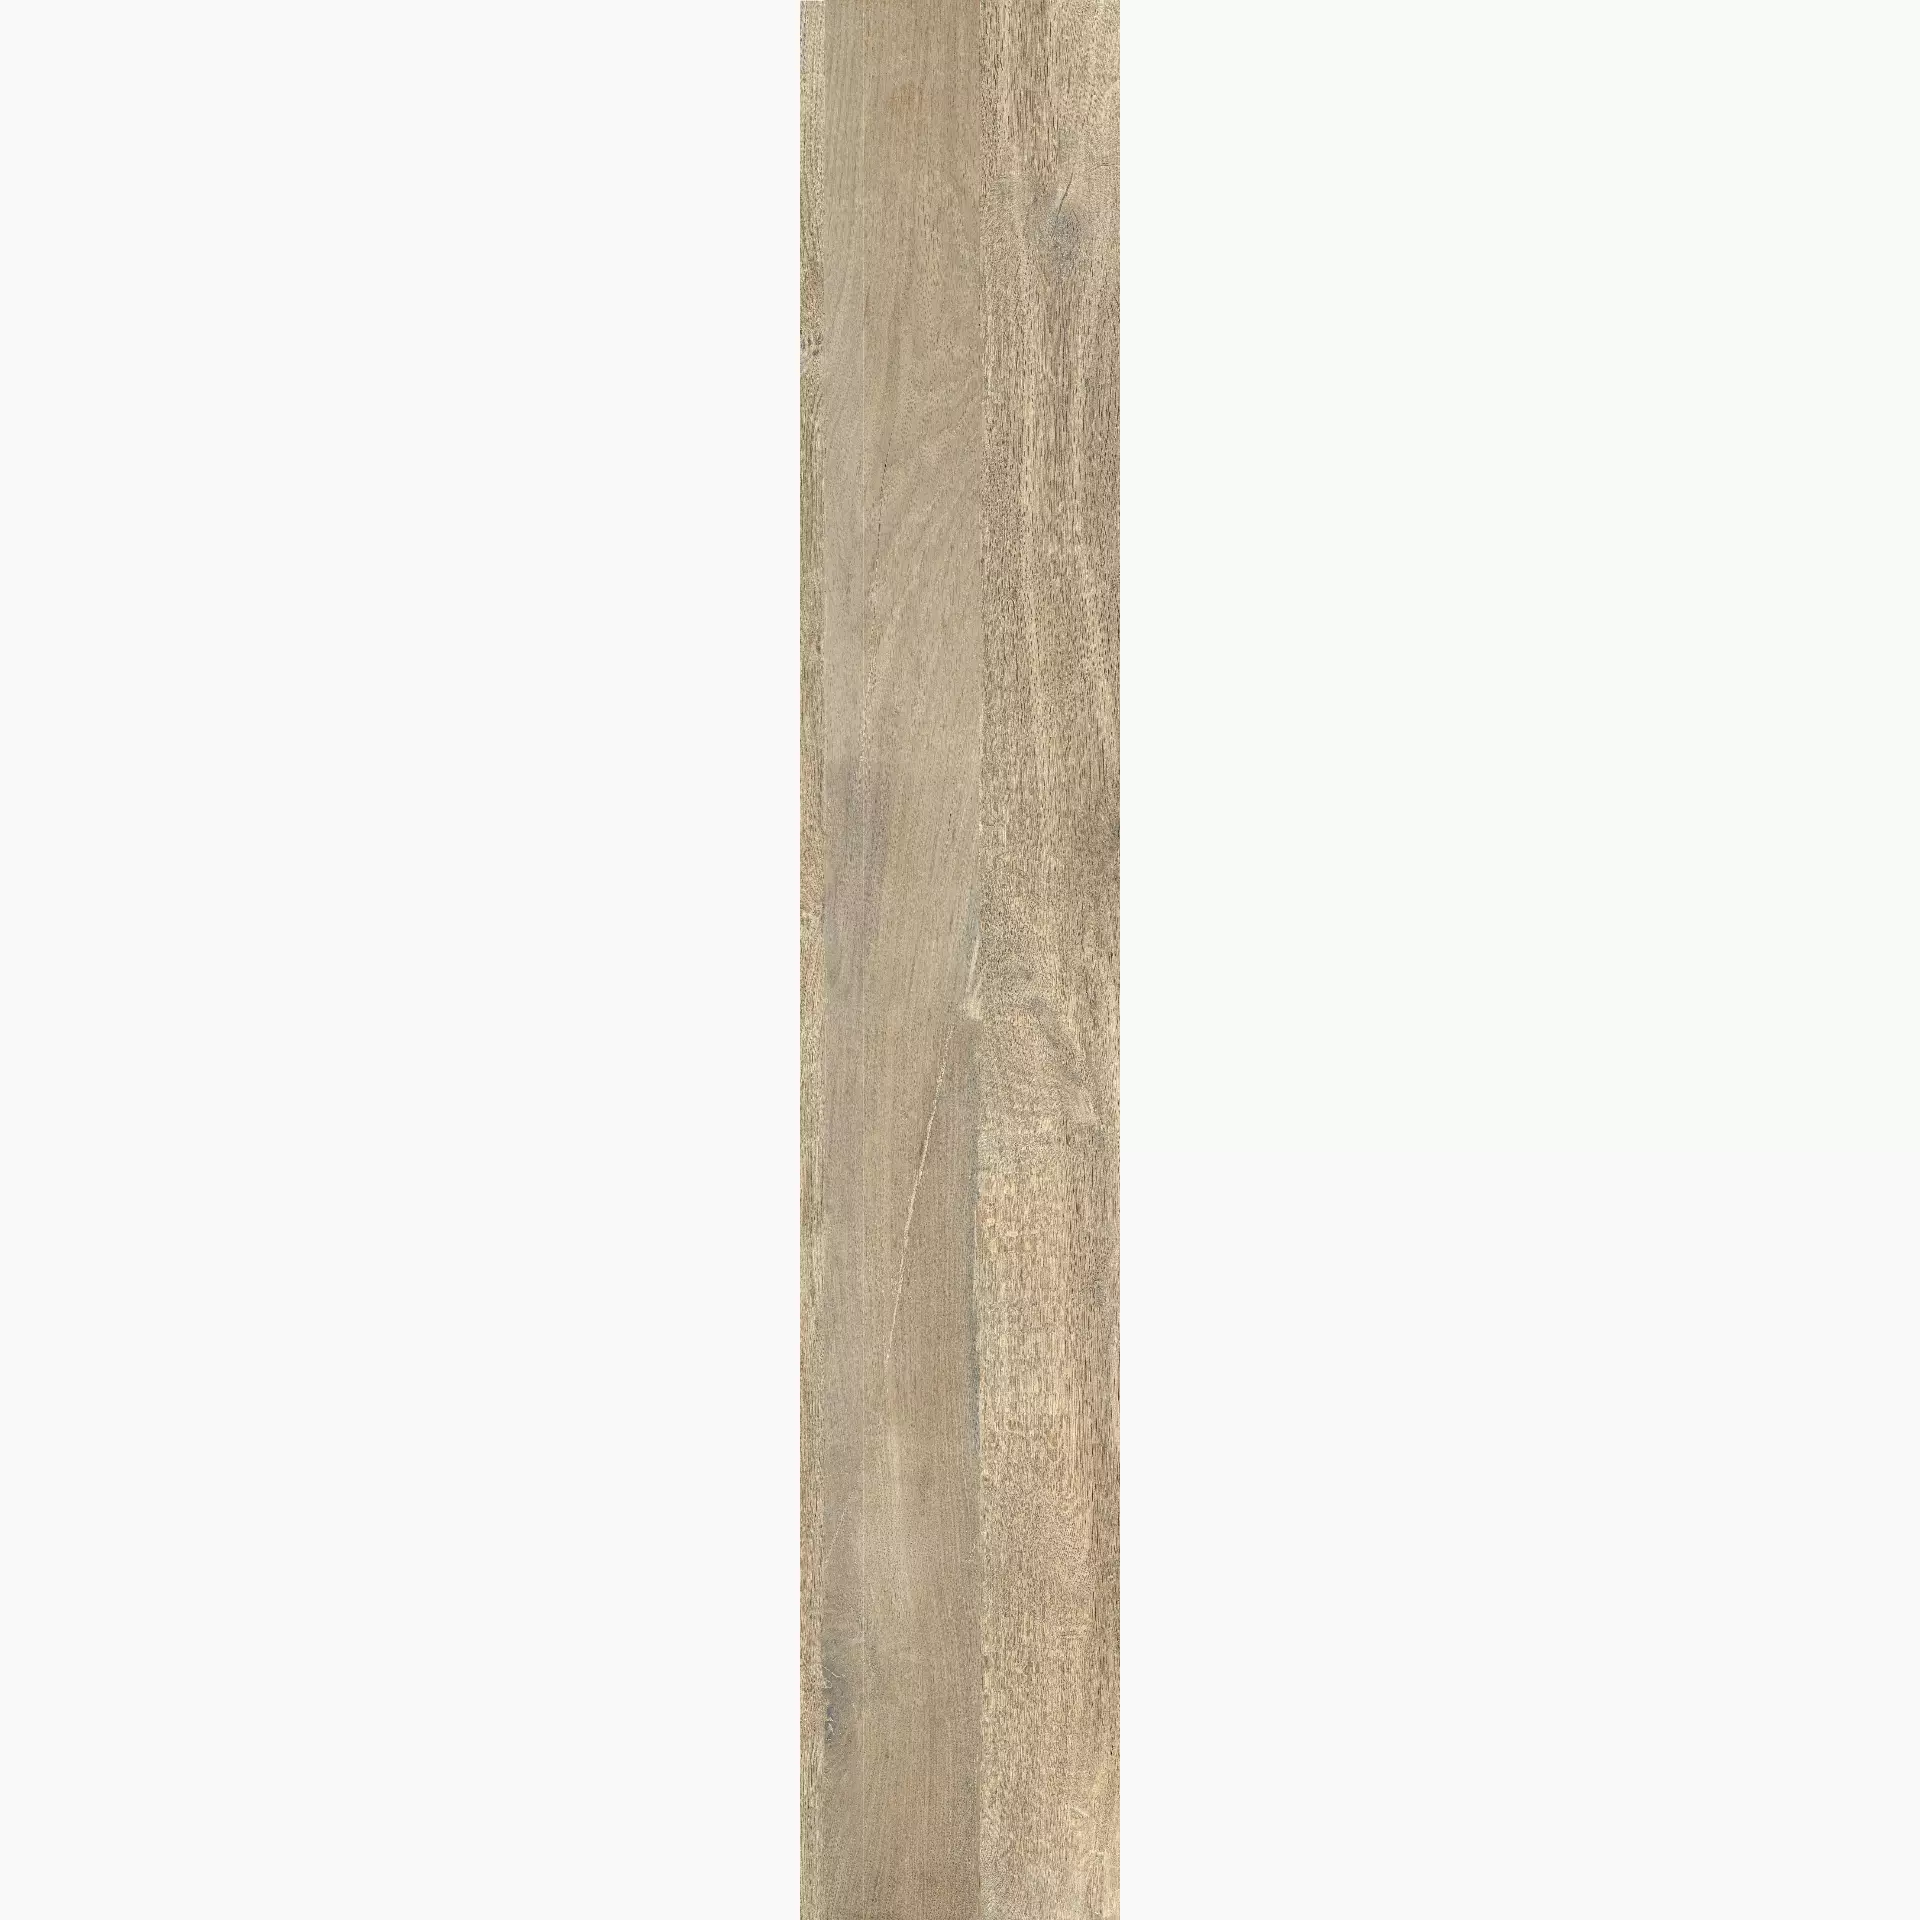 Fondovalle Woodblock Brave Oak Real Matt WOB003 40x240cm rectified 6,5mm